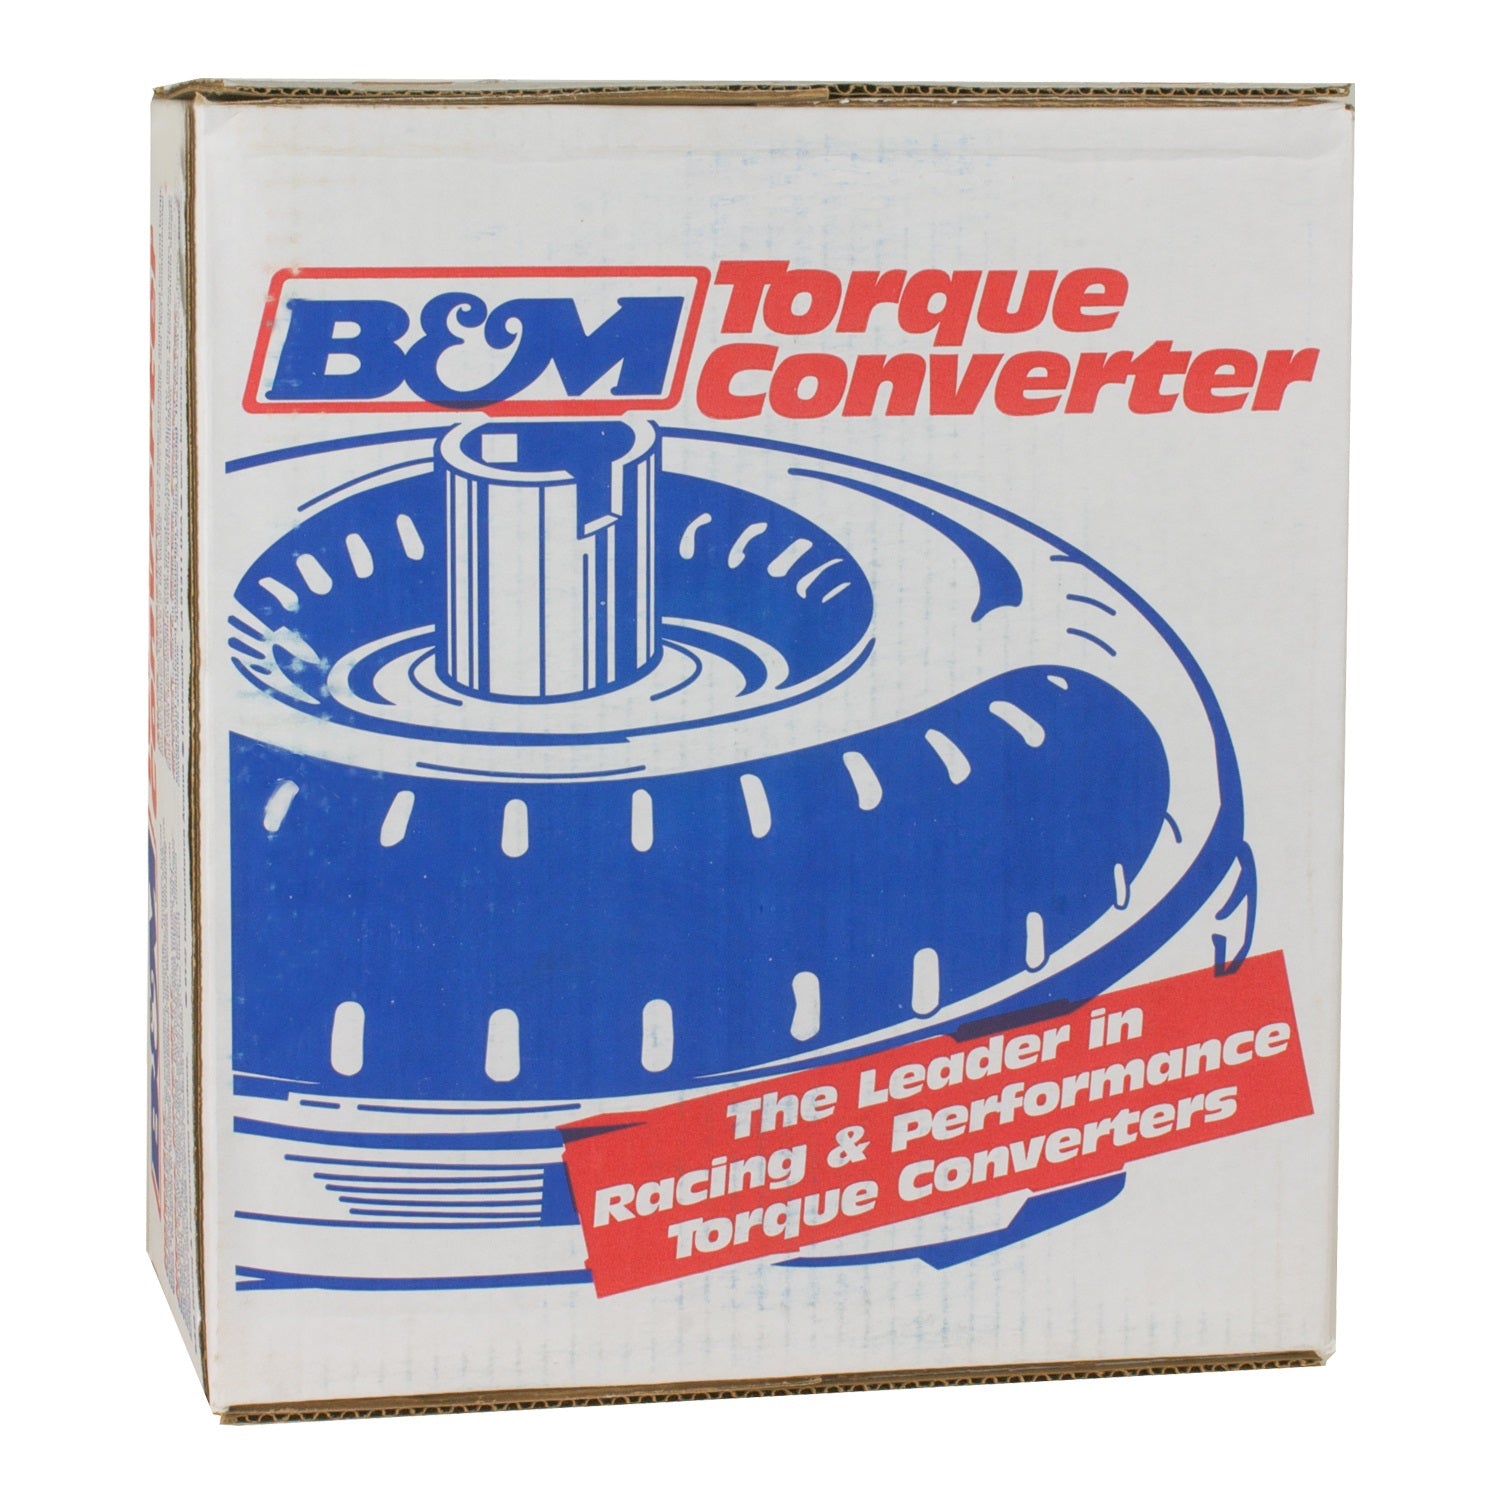 B&M 10415 Torque Converter, Holeshot 2400